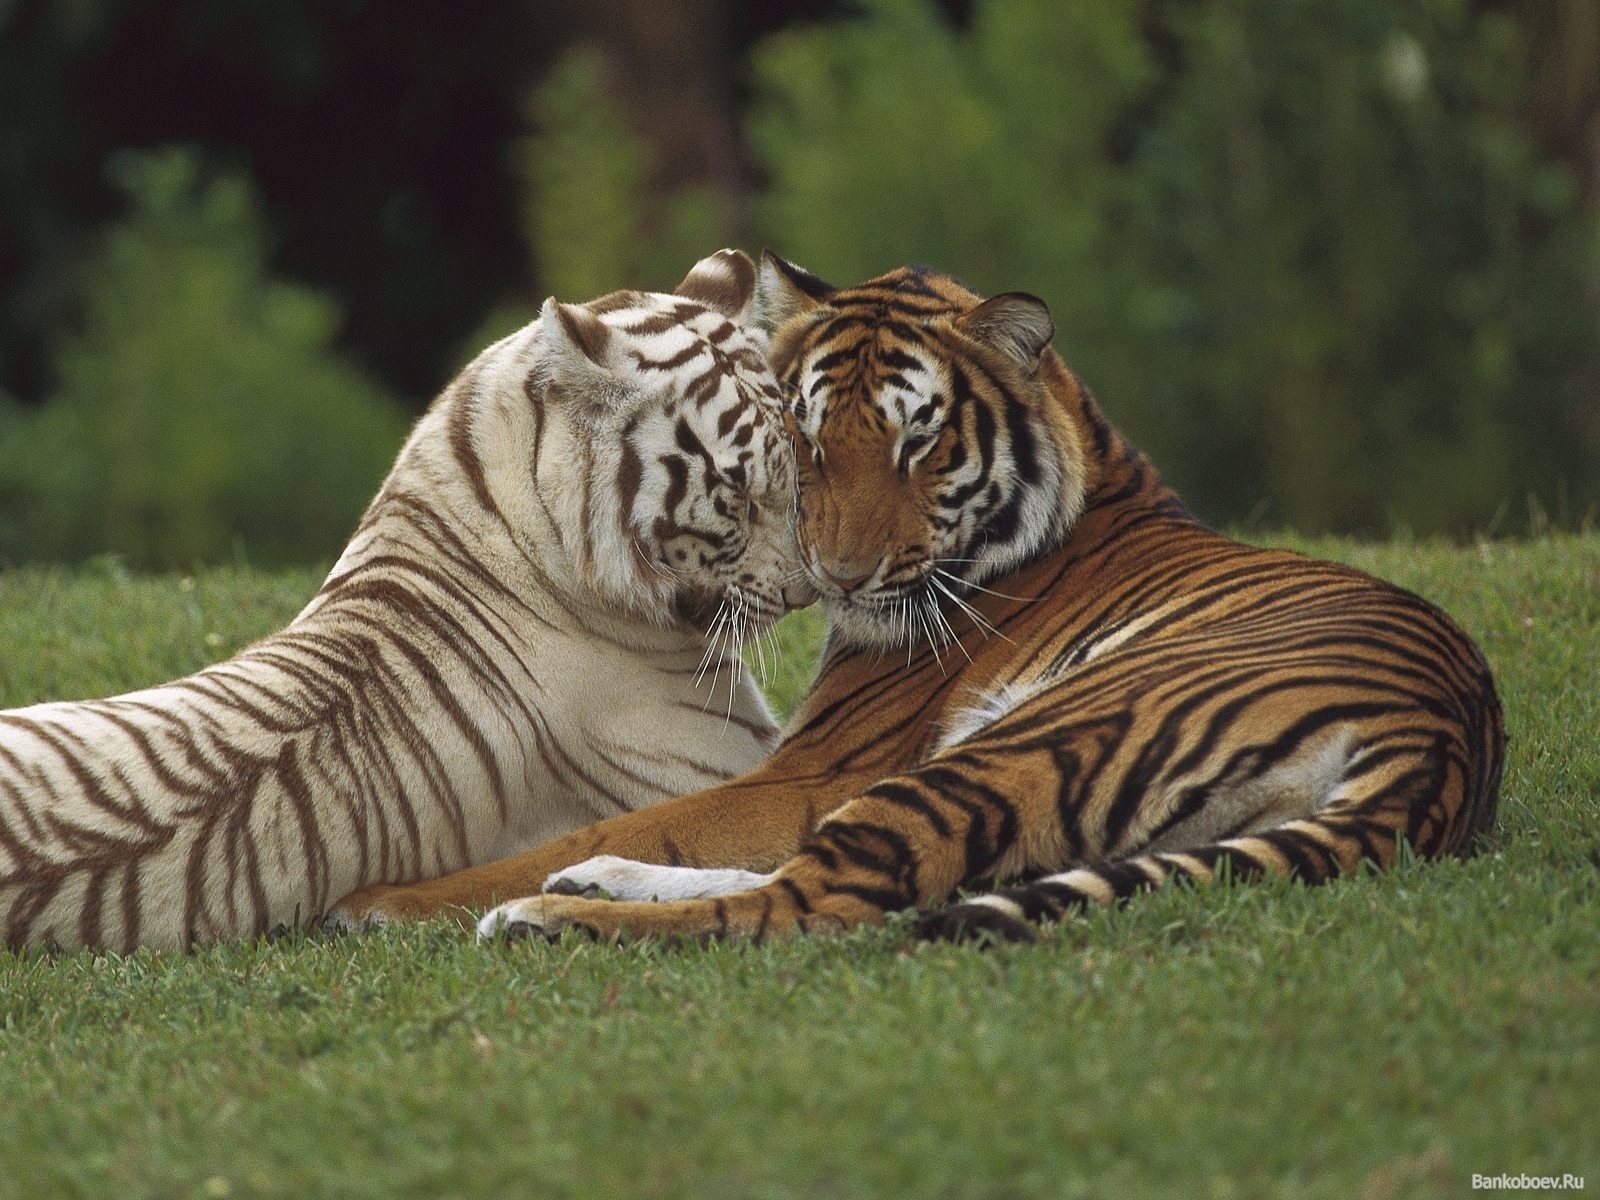 tigers, animals